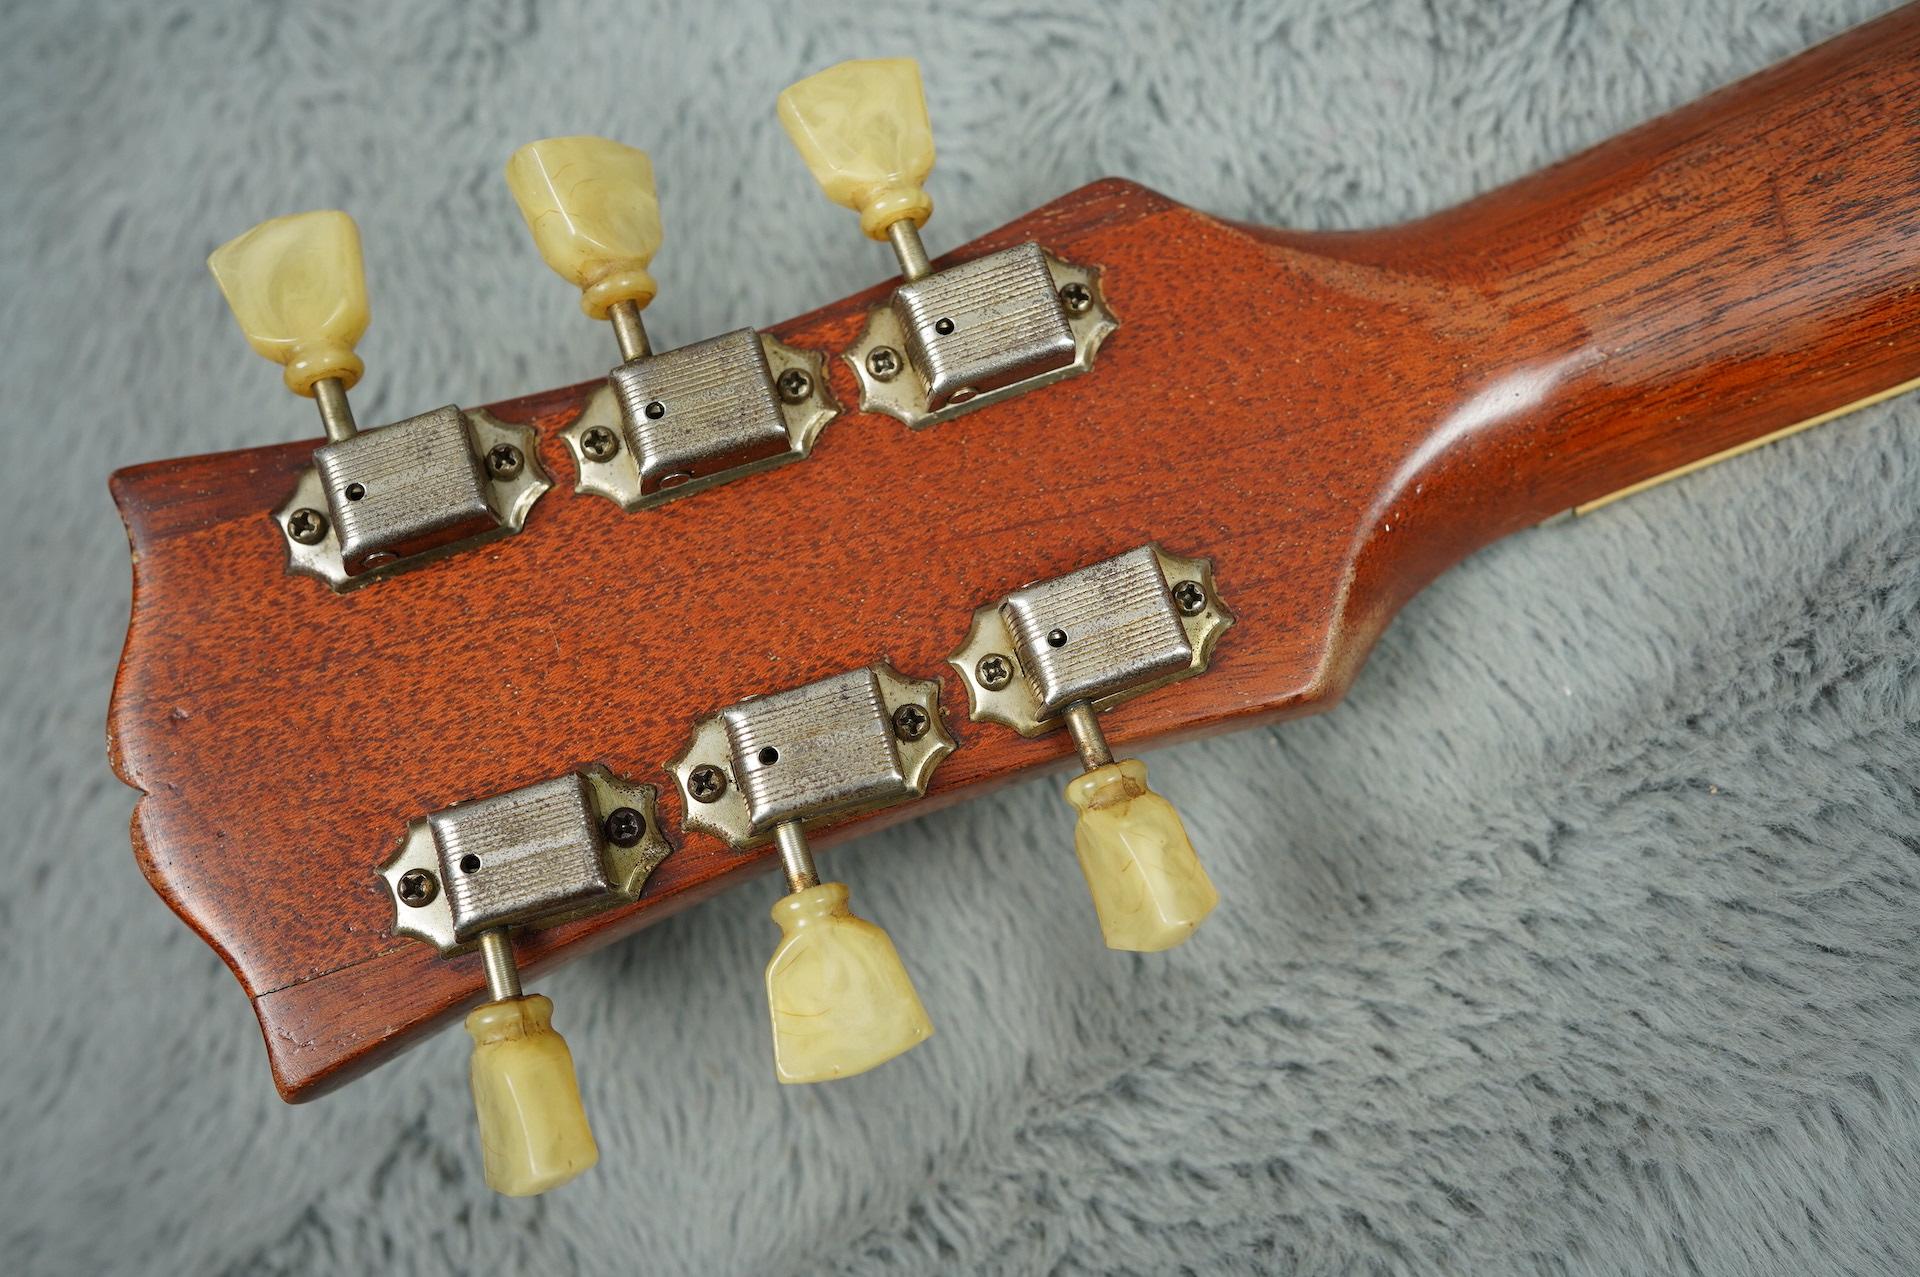 1955 Gibson ES-175DN